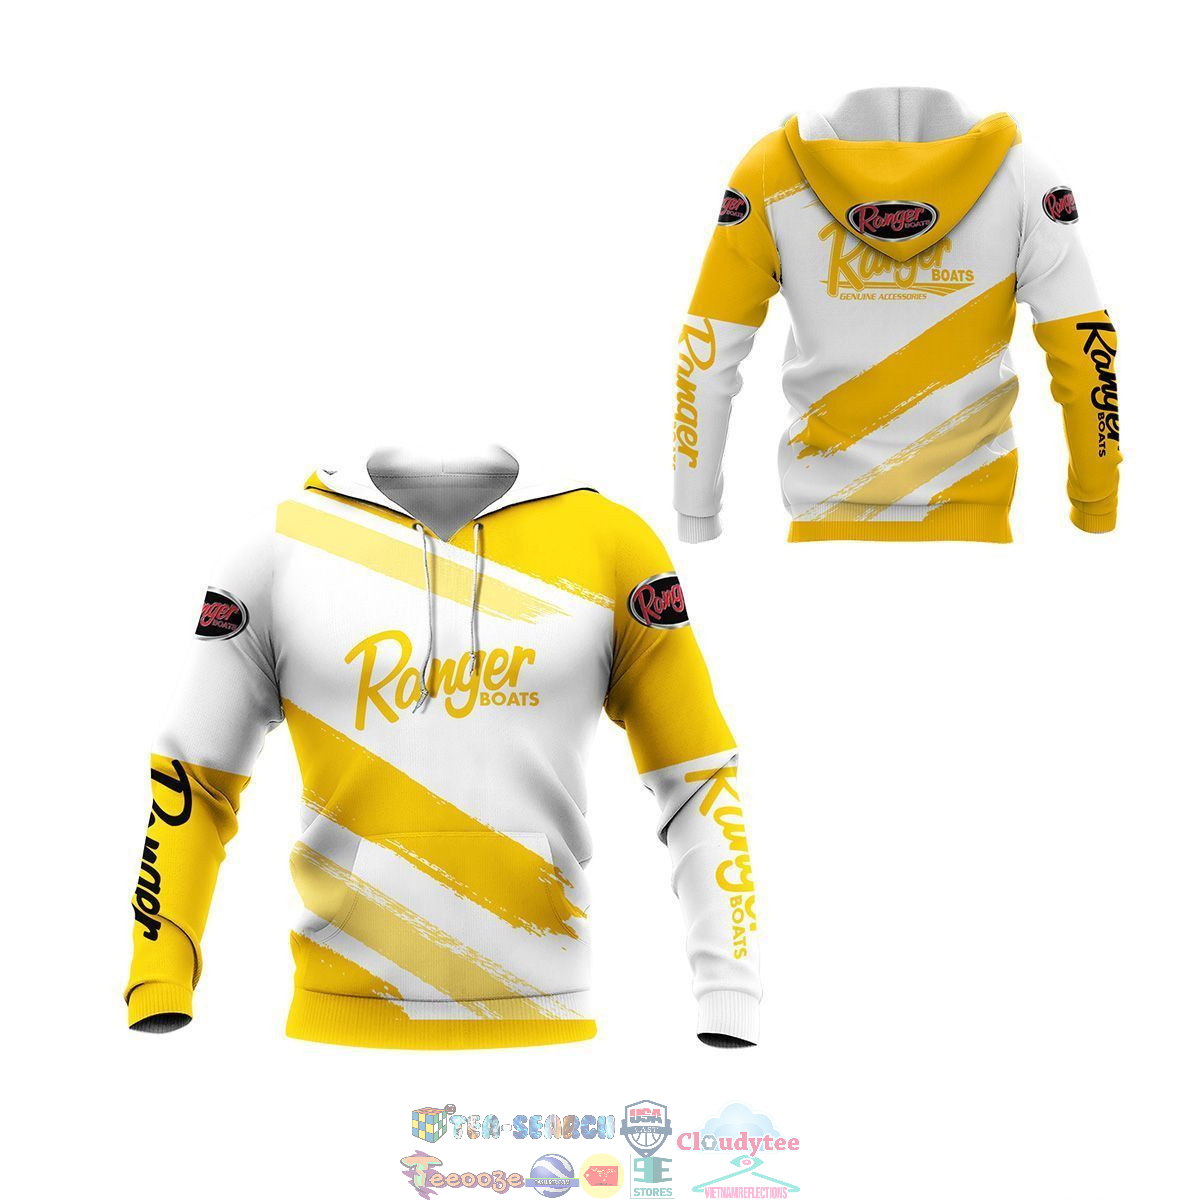 Ranger Boats ver 9 3D hoodie and t-shirt – Saleoff